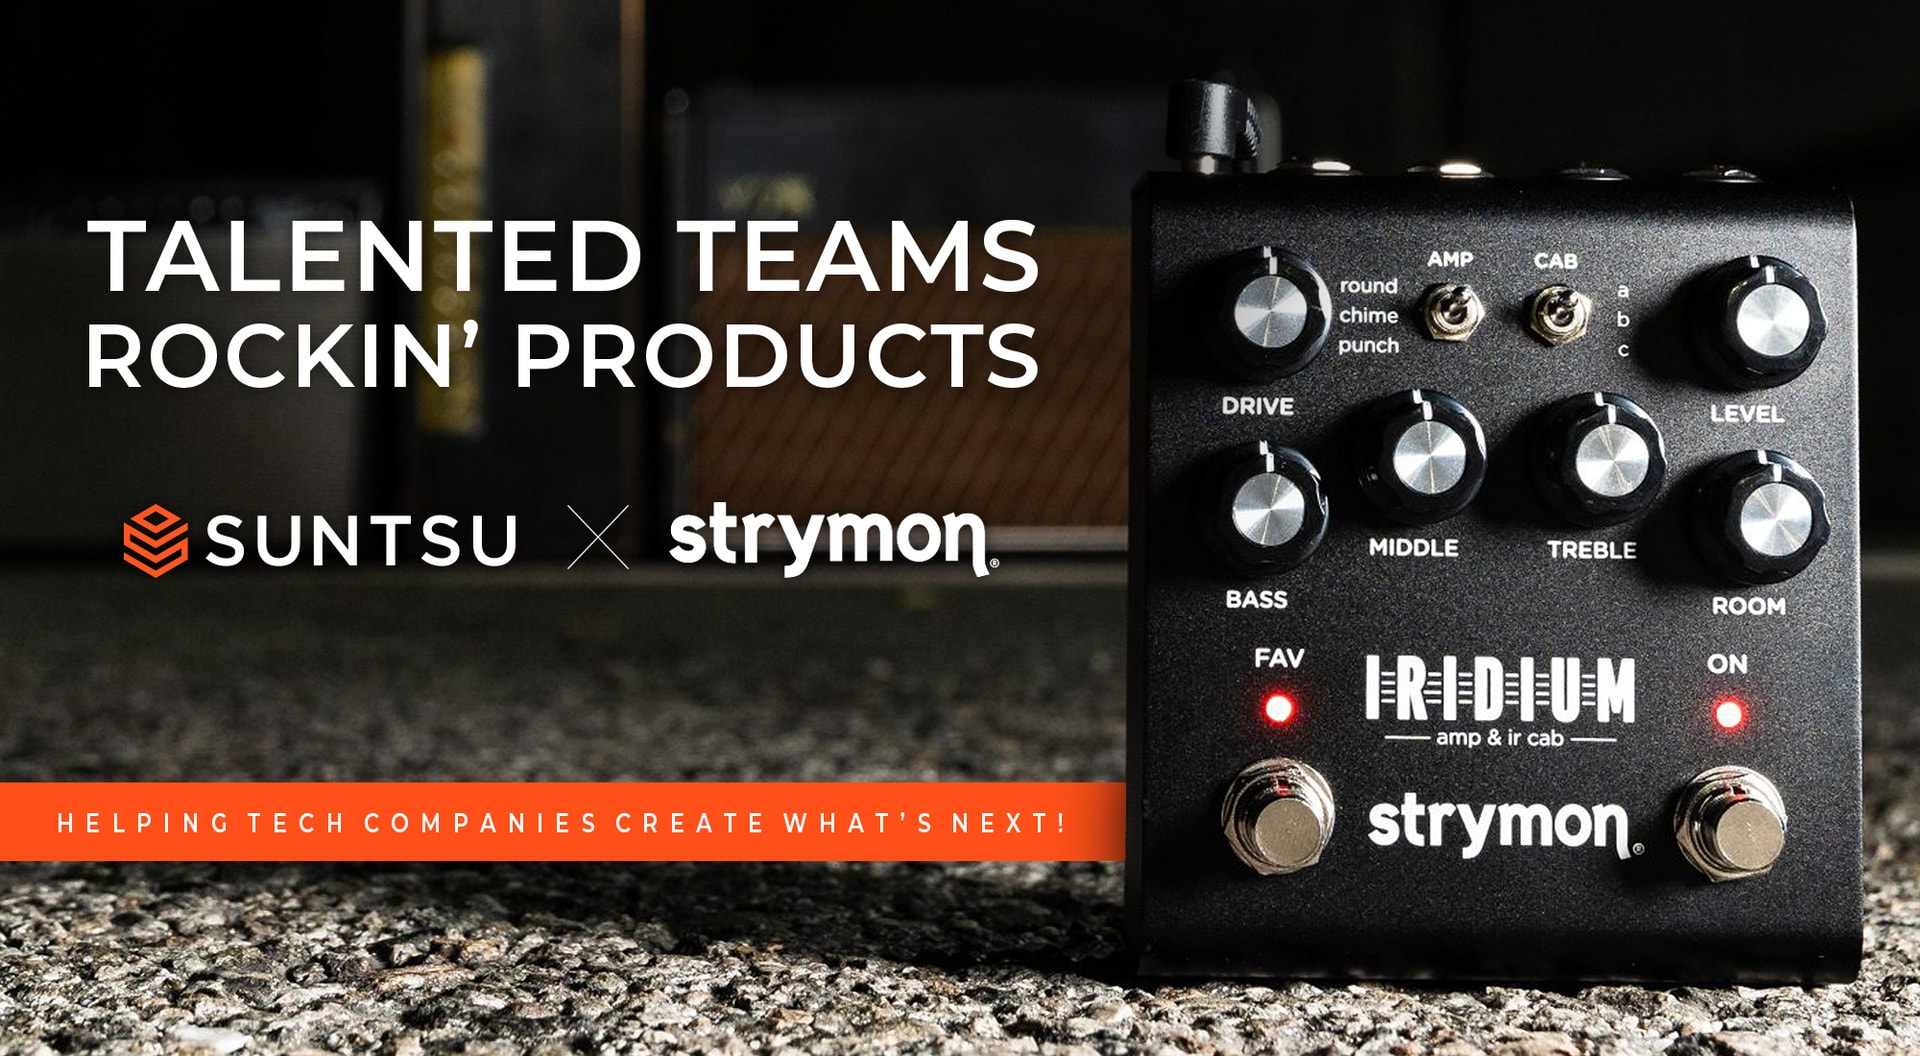 Suntsu and Strymon Talented Teams Rockin' Products